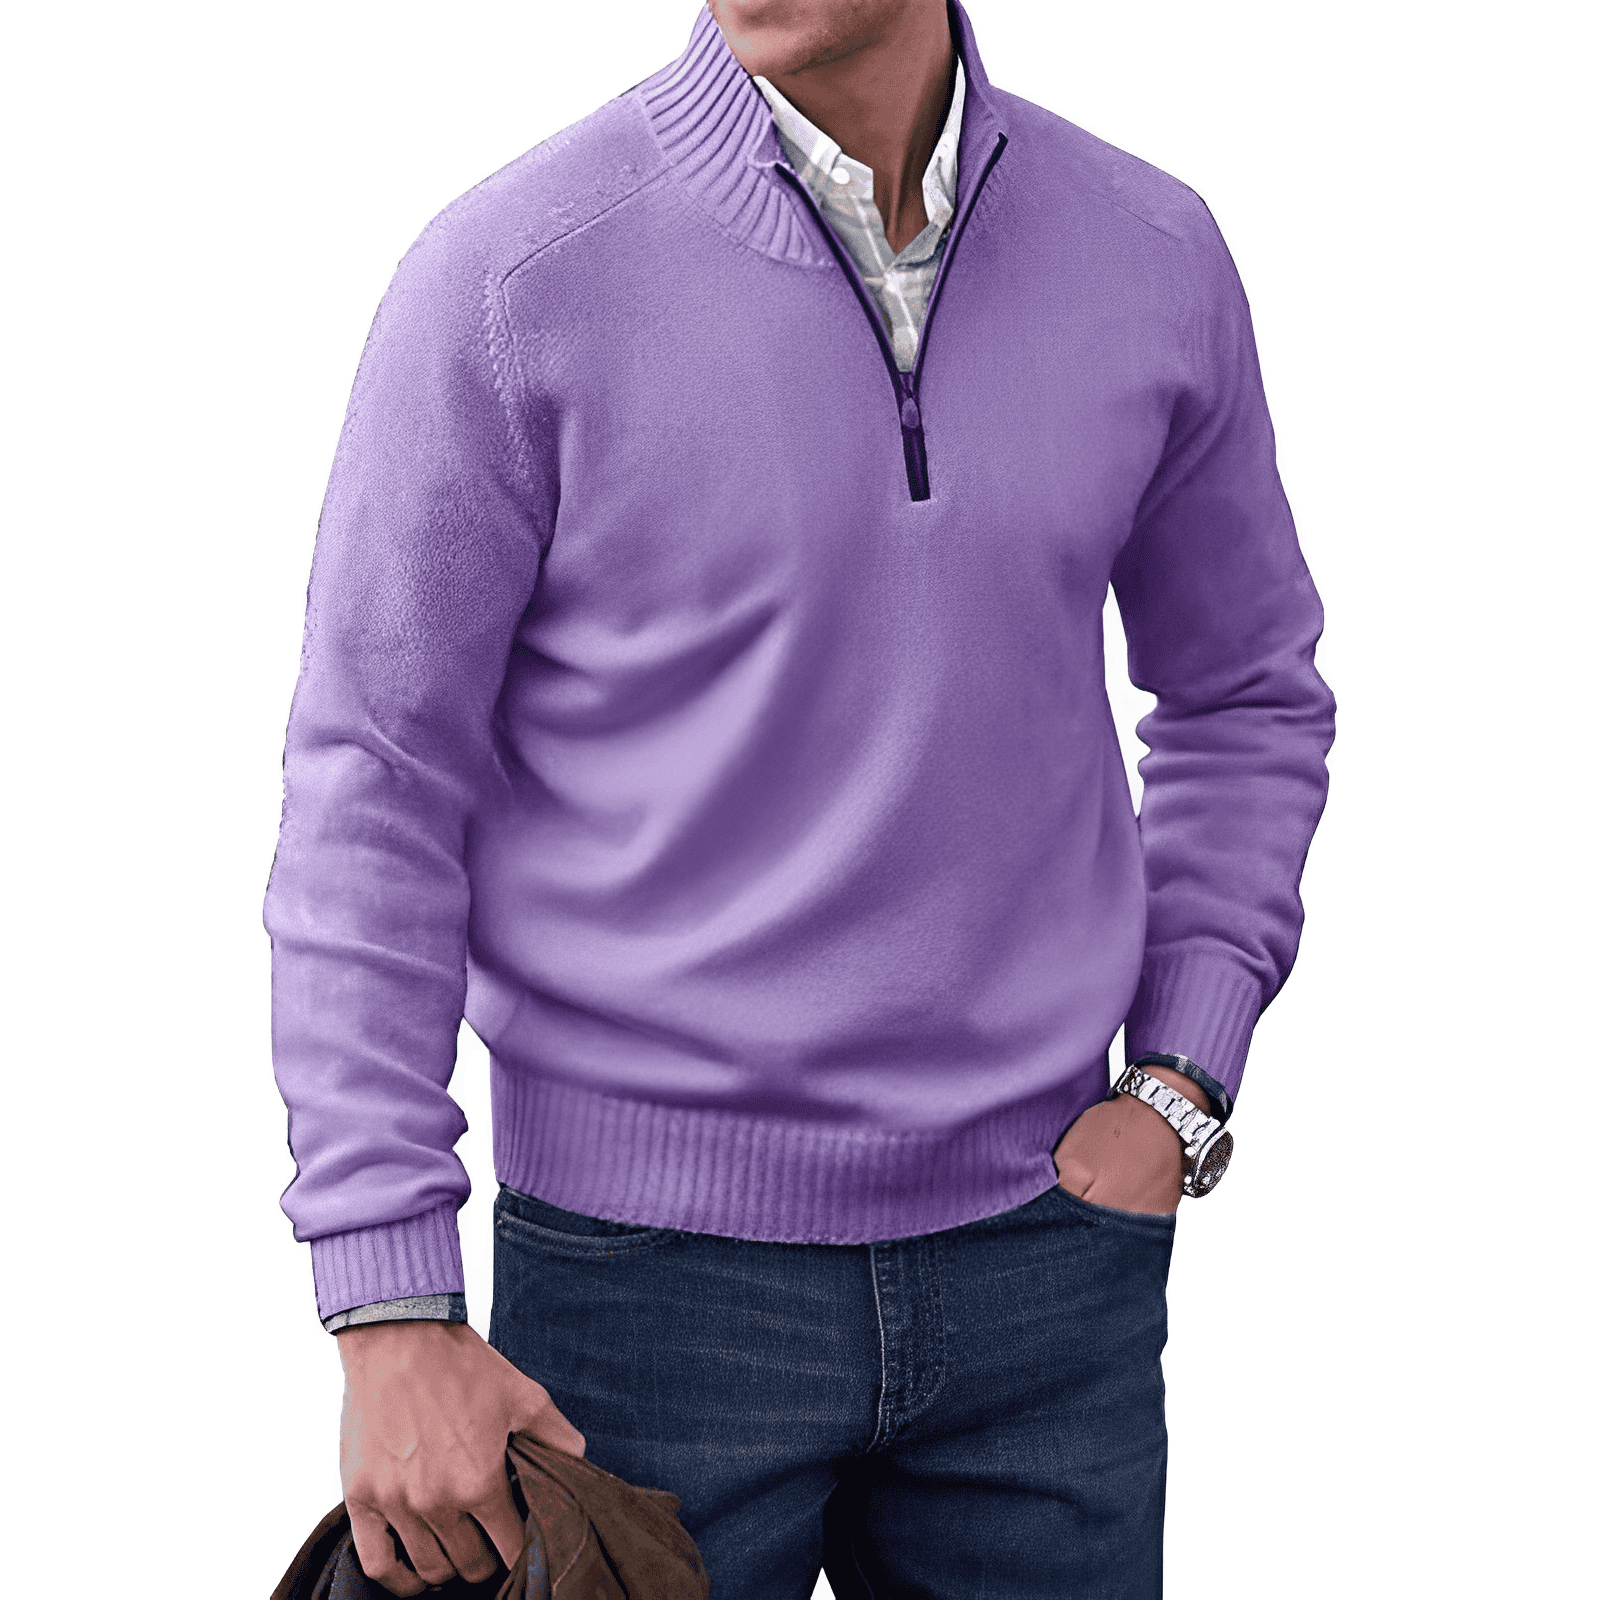 Cashmere Quarter Zip Sweater